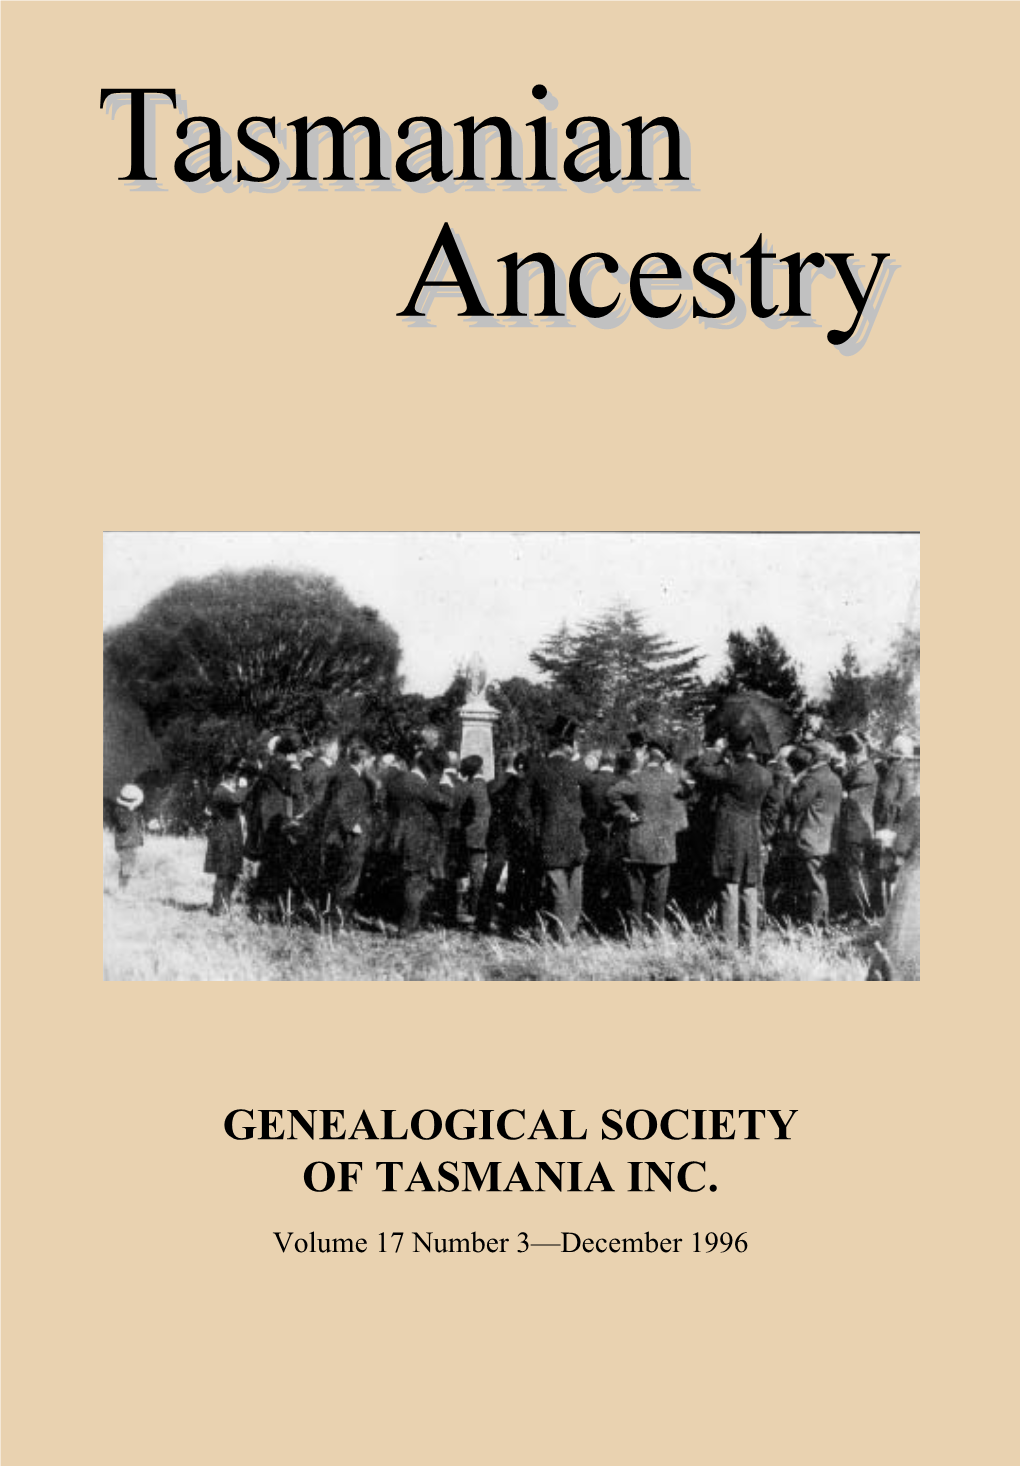 Genealogical Society of Tasmania Inc